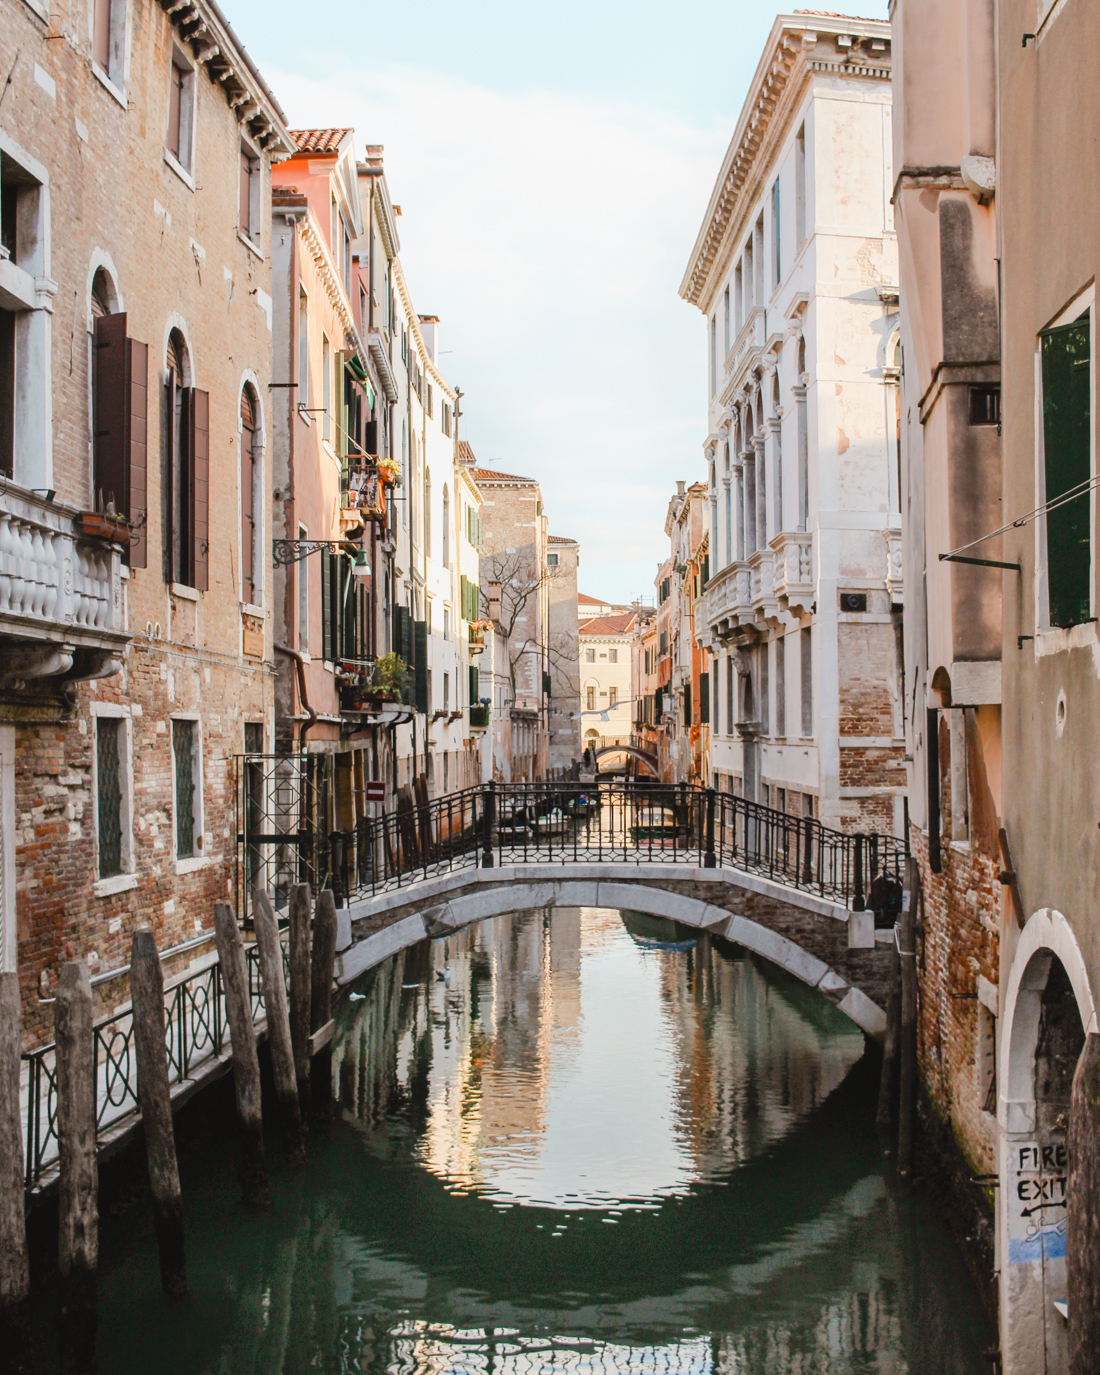 Venice in the winter- Bridge over canal